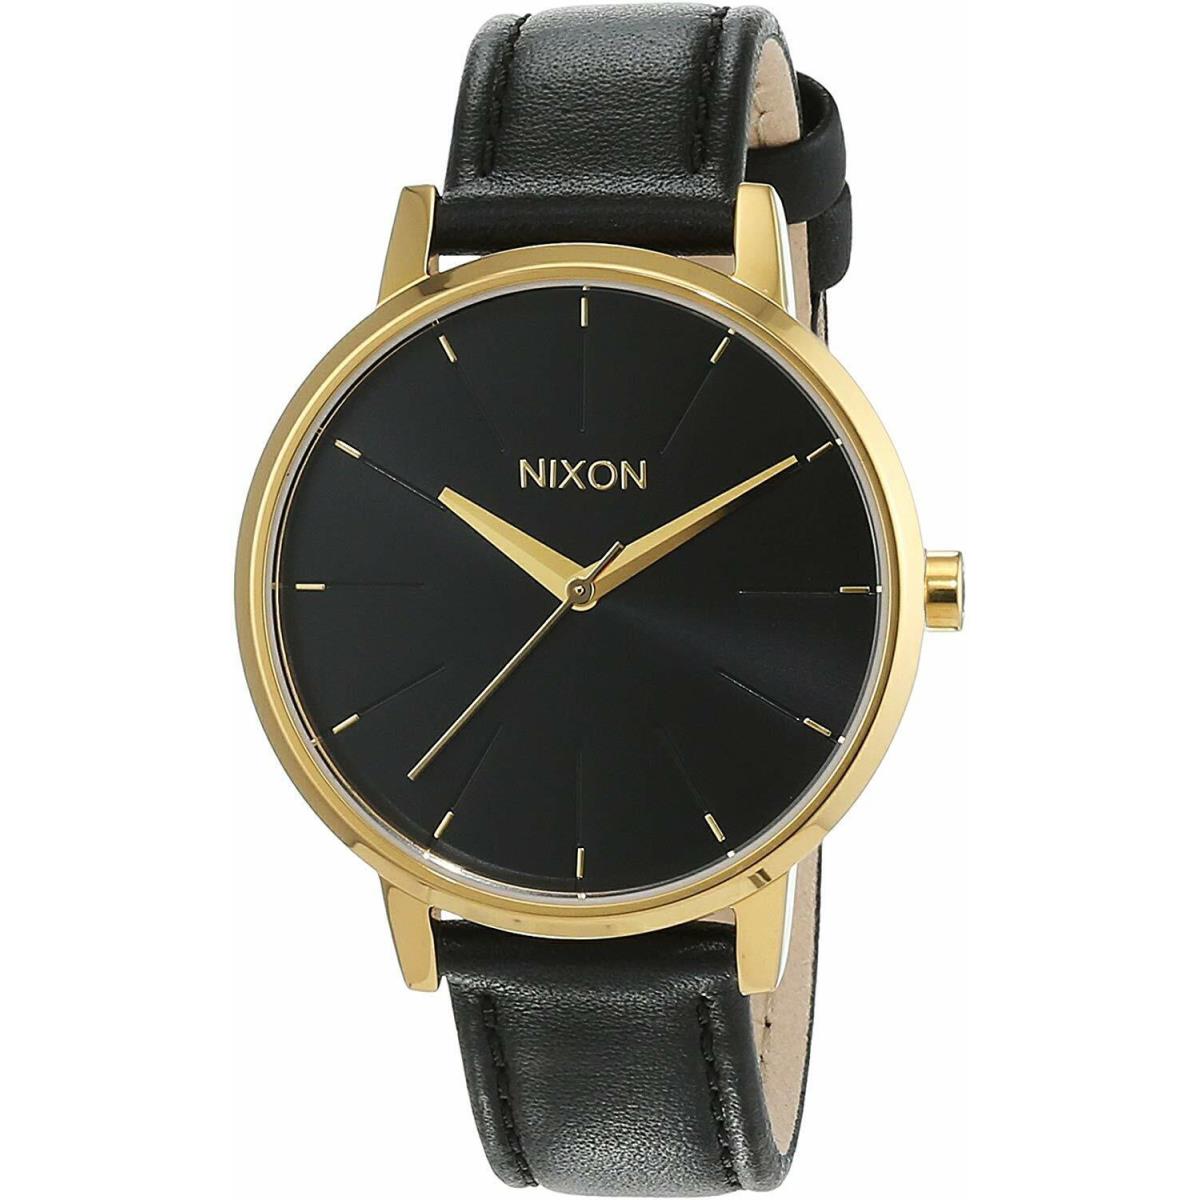 Nixon Kensington Leather Watch / Gold Black / A108-513 / A108 513 / A108513